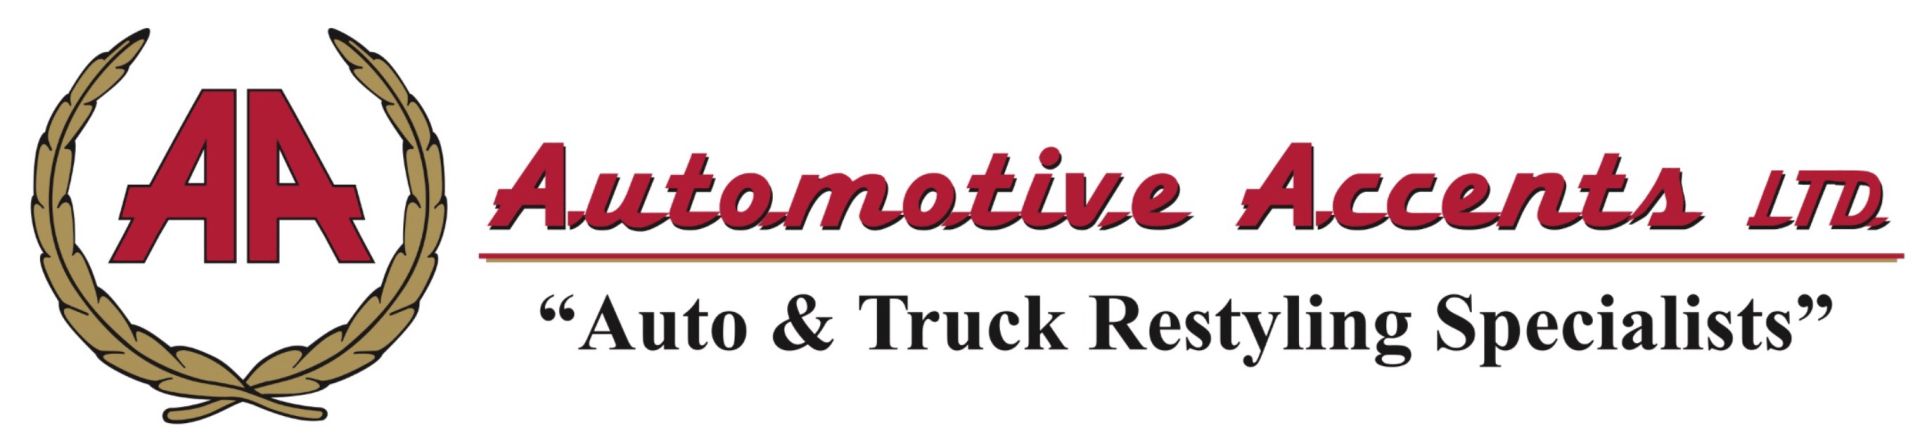 Automotive Accents LTD - Logo